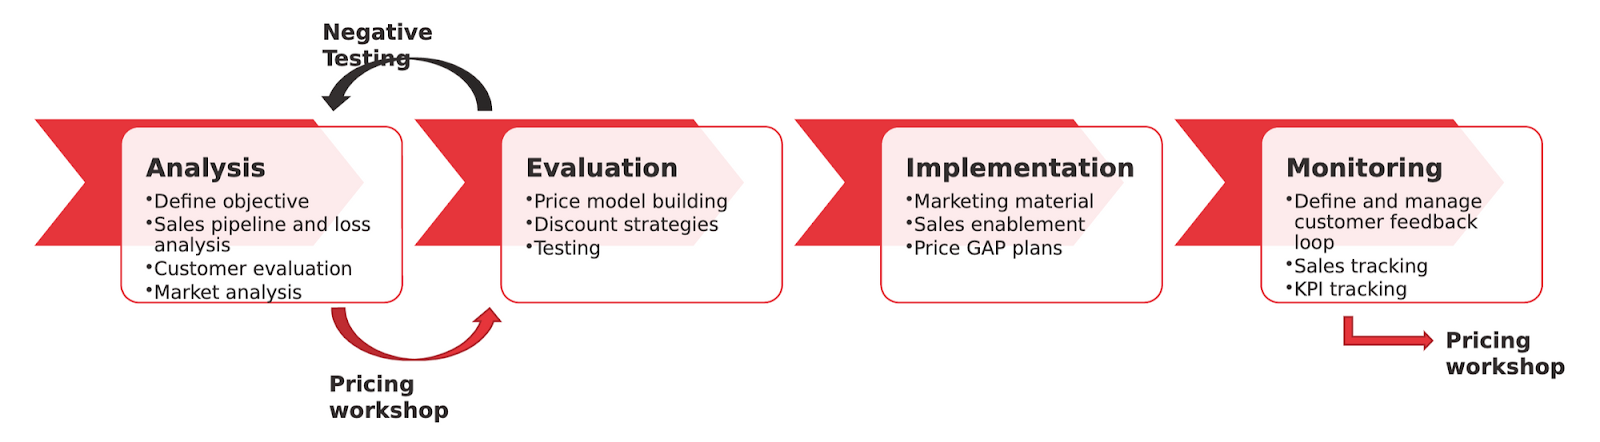 Framework for pricing